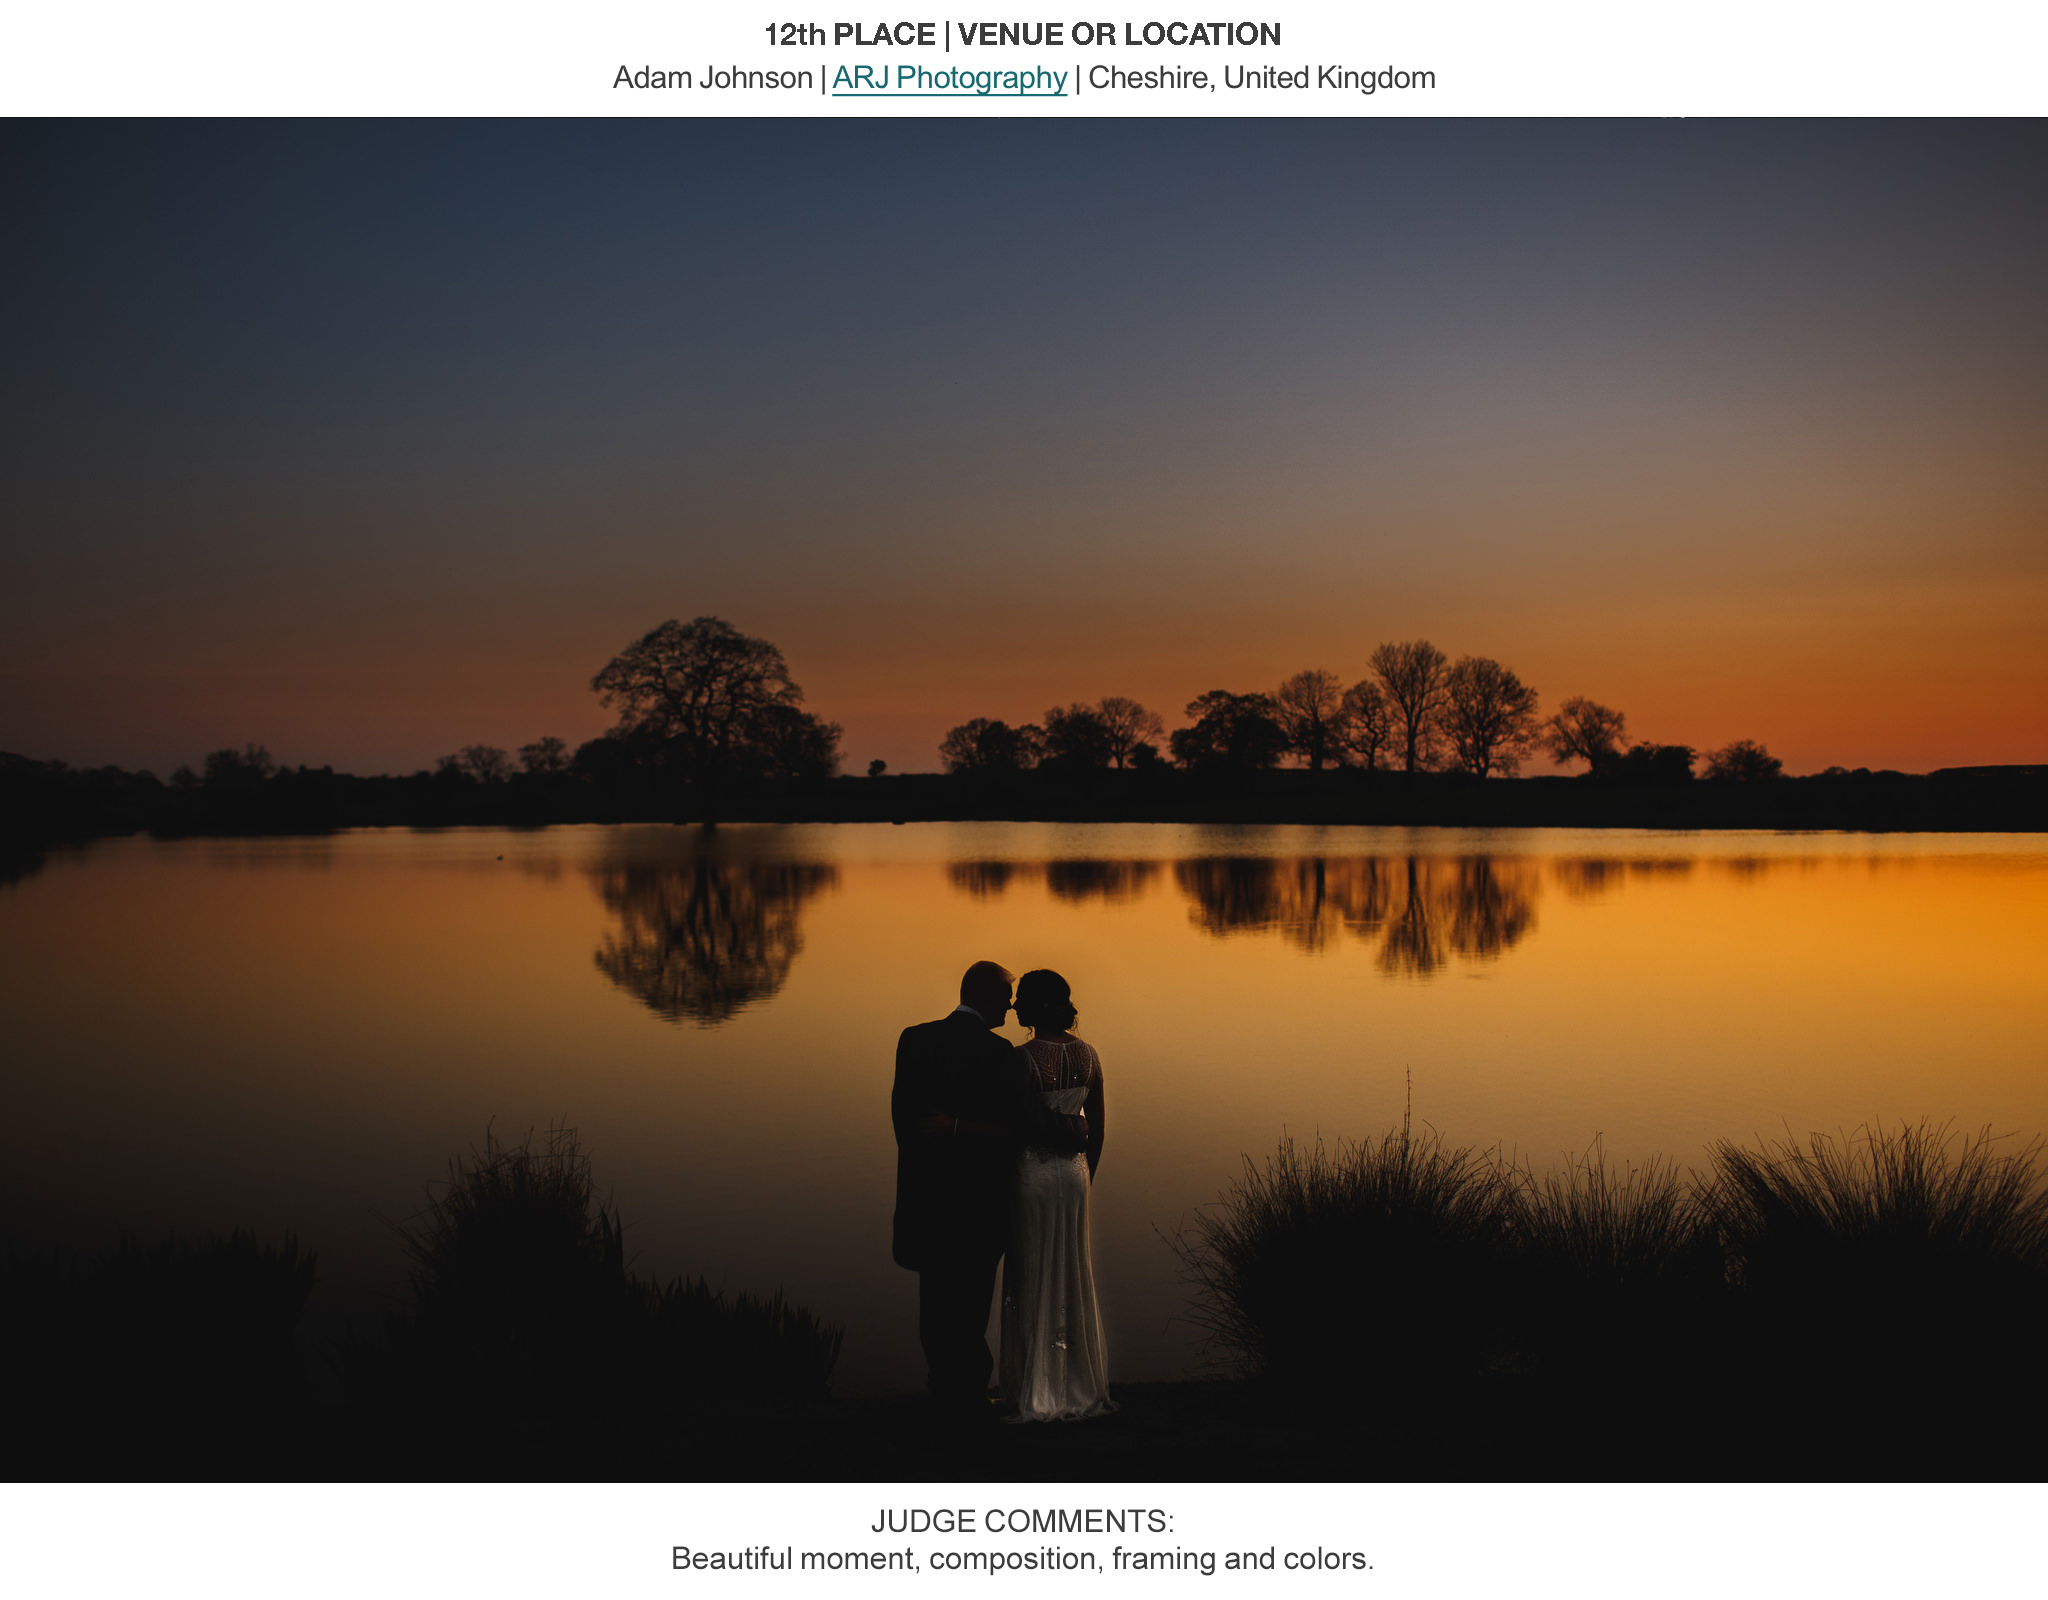 Award winning wedding photography - ispwp winter 2014 contest - arj photography